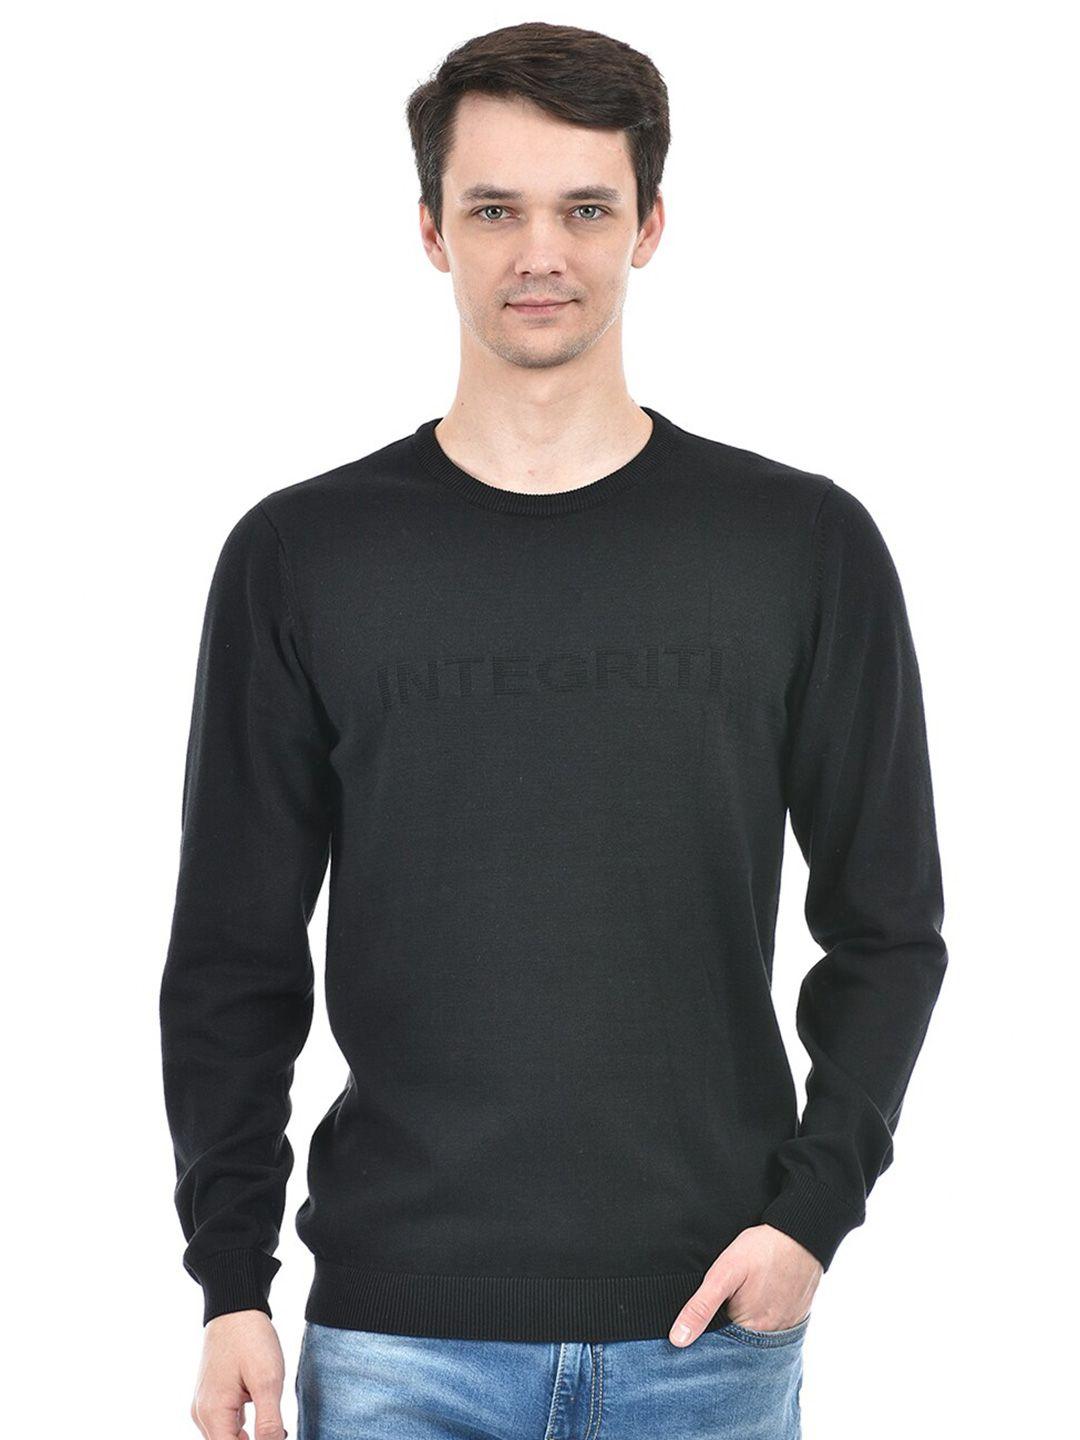 integriti-men-typography-printed-pullover